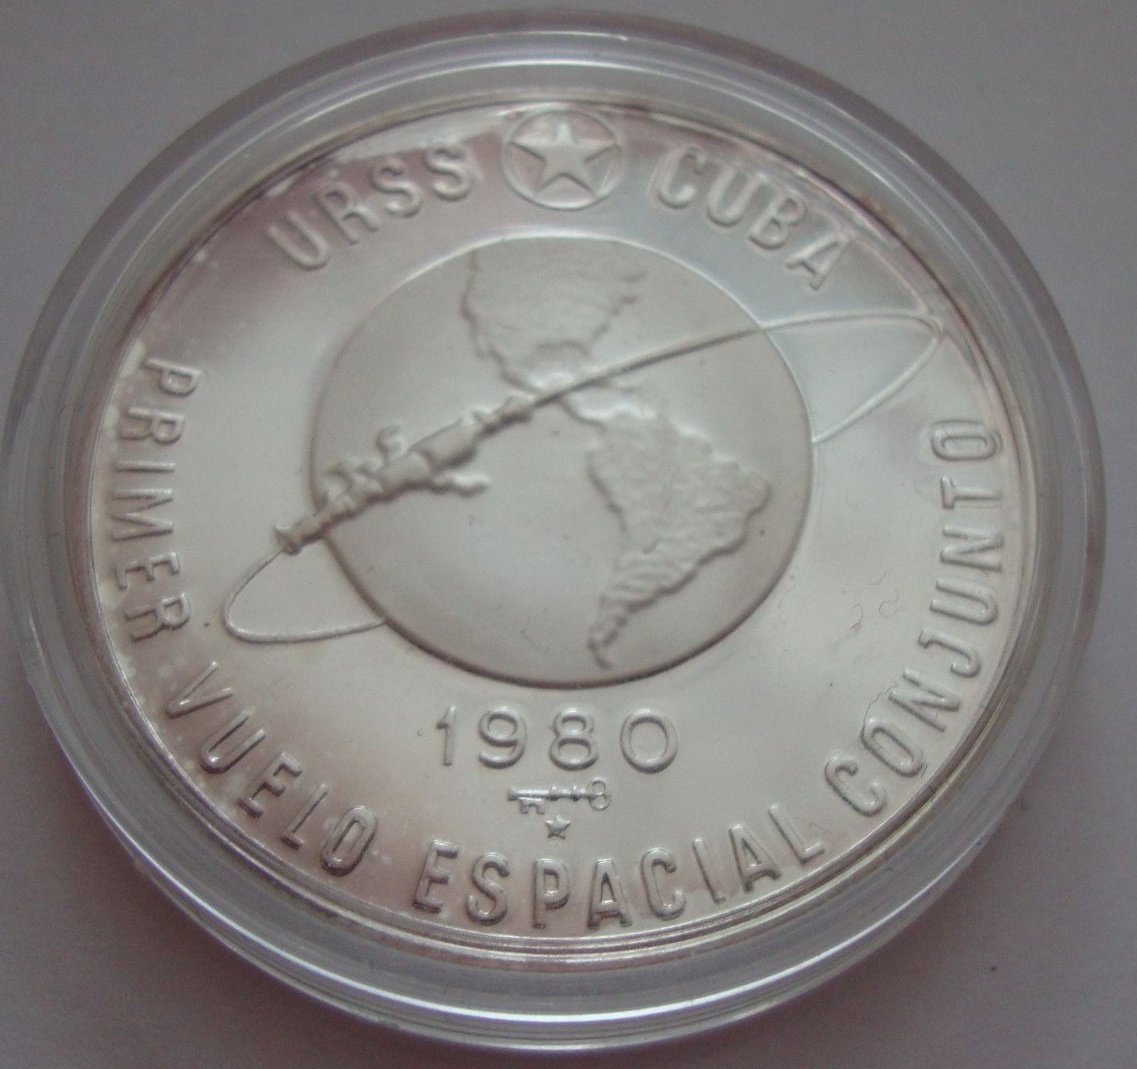 Cuba. 1980. 10 pesos. Series: First Joint Space Flight. -#1. First Soviet - Cuban Space Flight. Globe. 0.999 Silver. 0.5782 Oz ASW. 18.0g. BU. KM#50. UNC. Mintage: 10,000